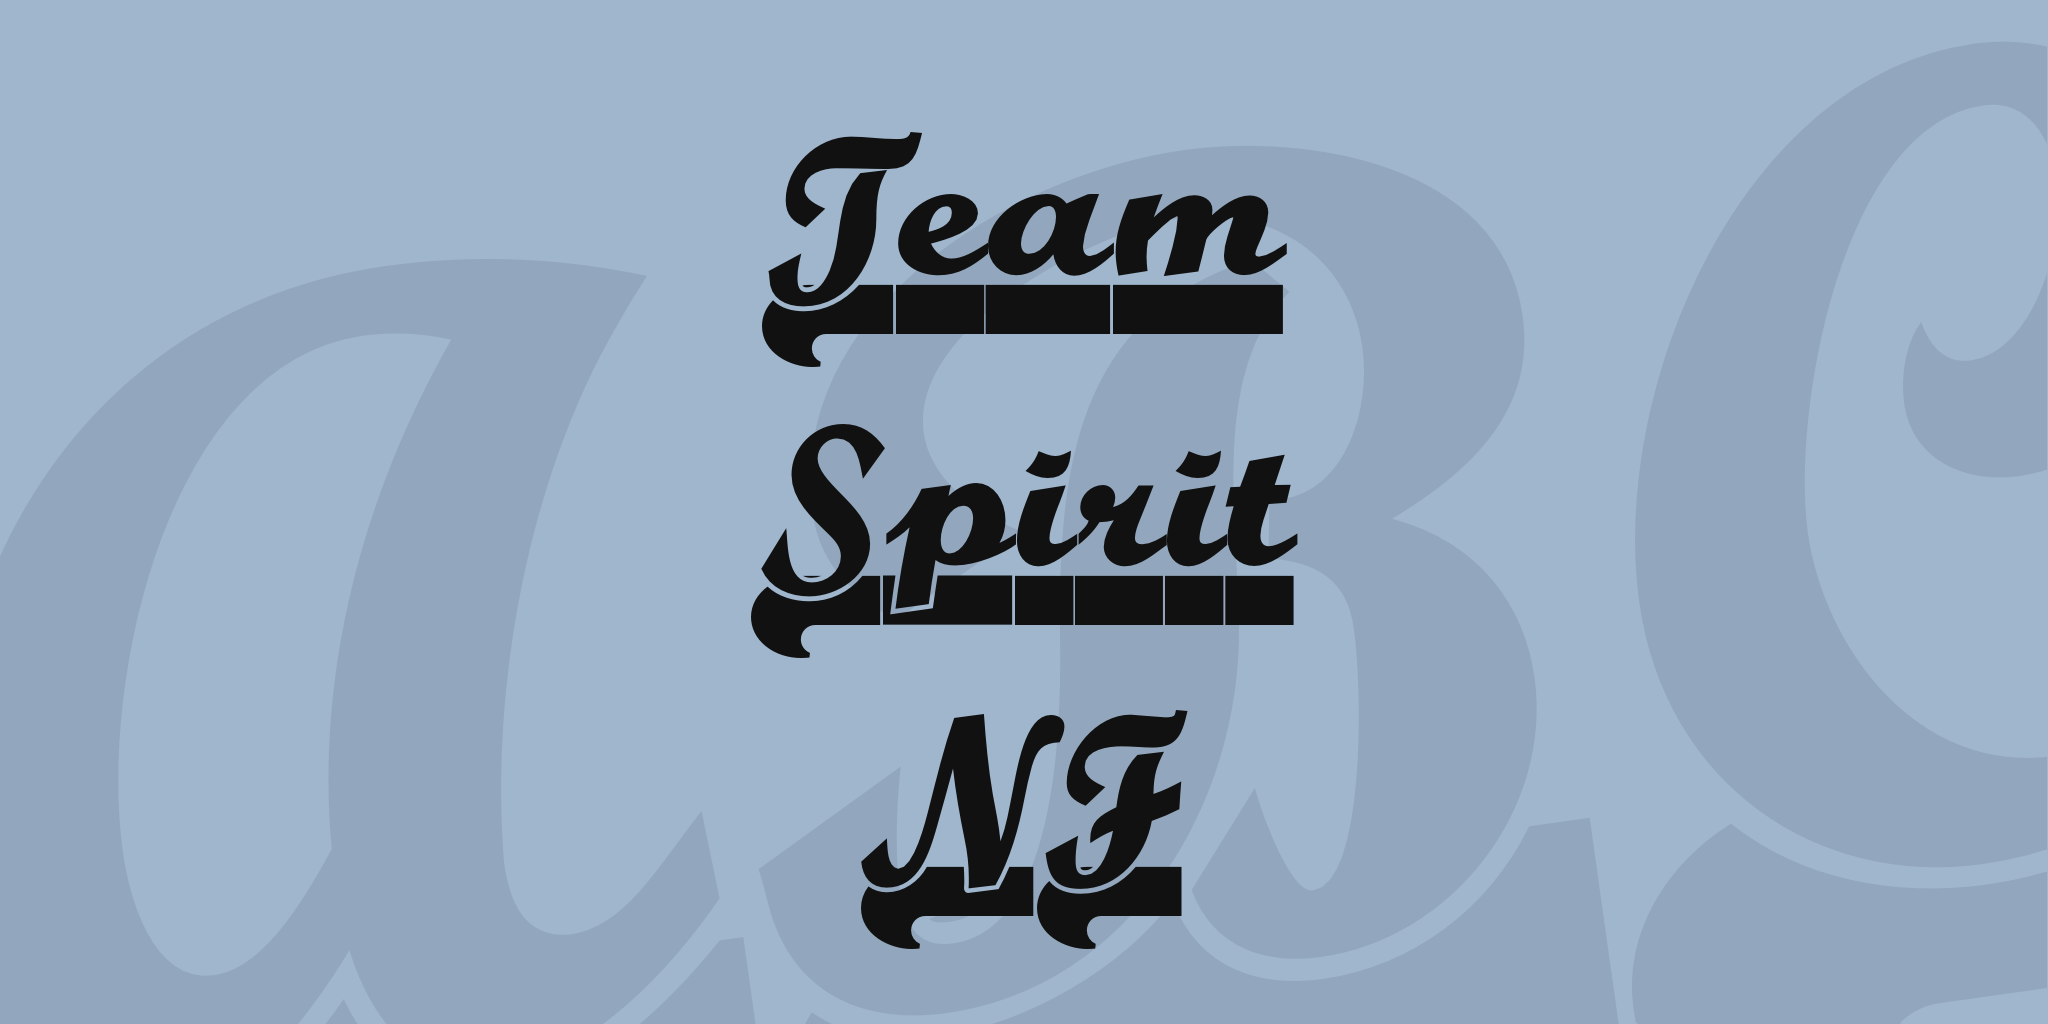 Team Spirit Nf